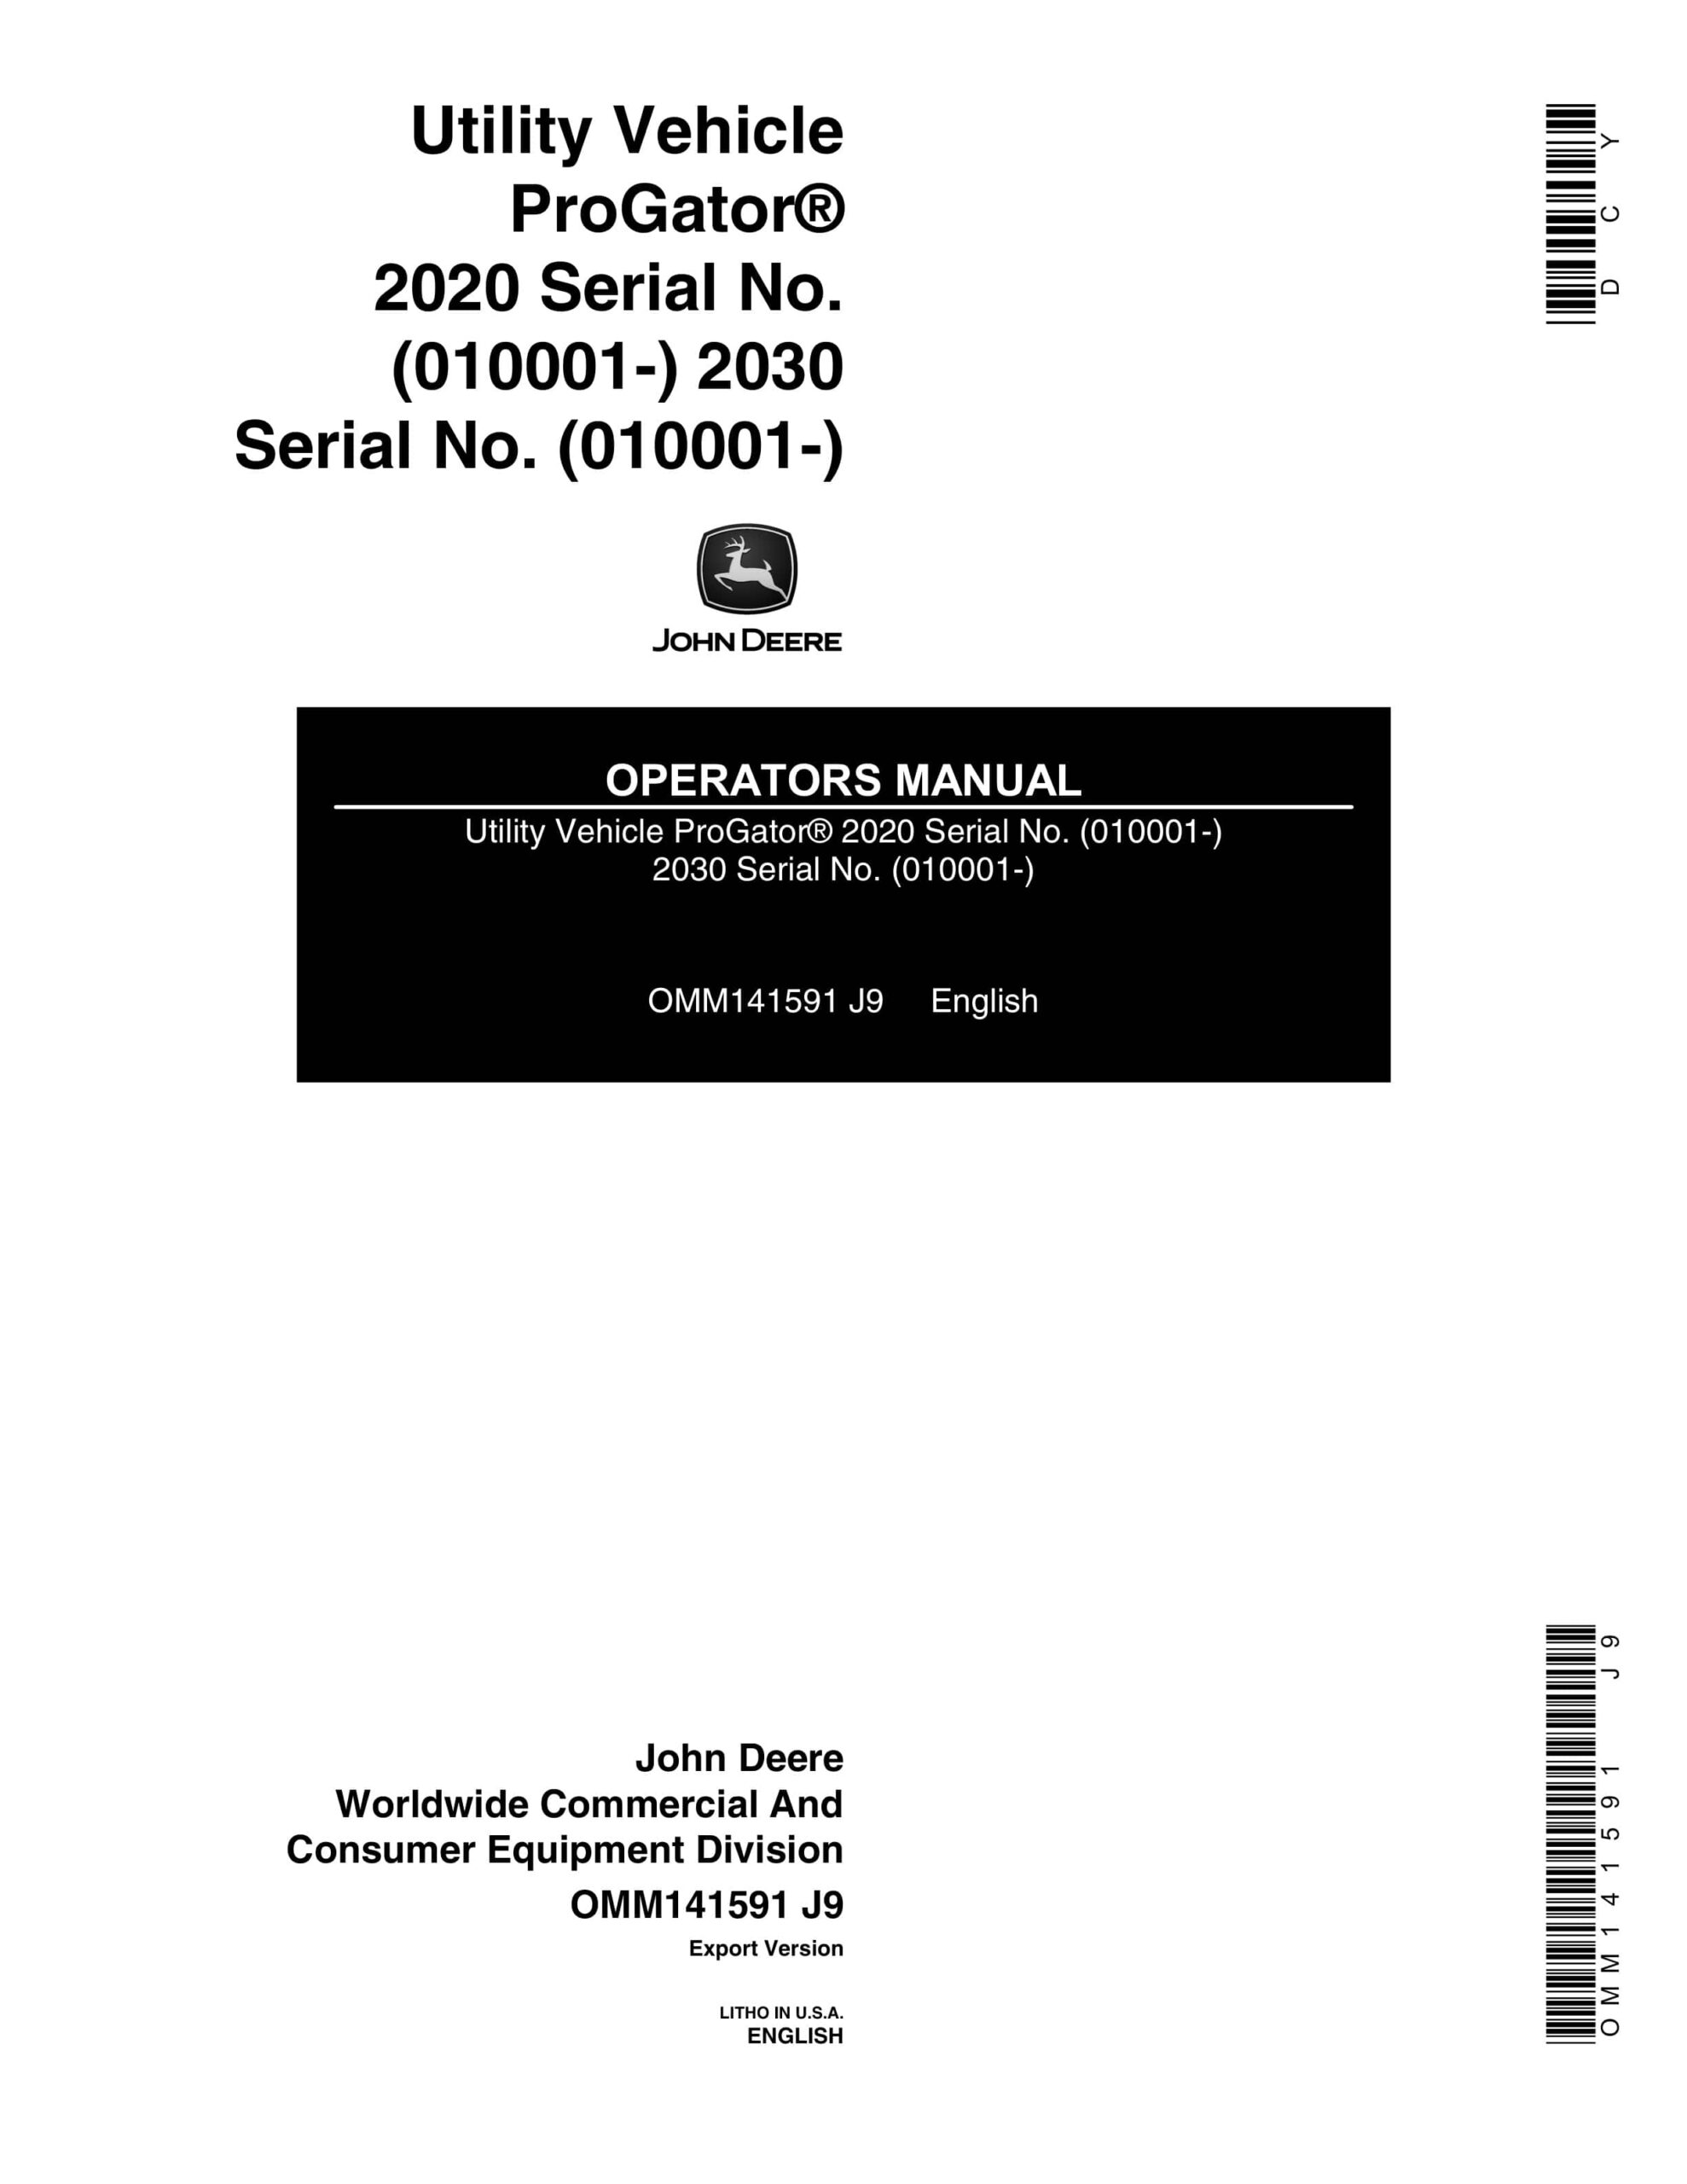 John Deere 2020 2030 ProGator Utility Vehicles Operator Manual OMM141591-1